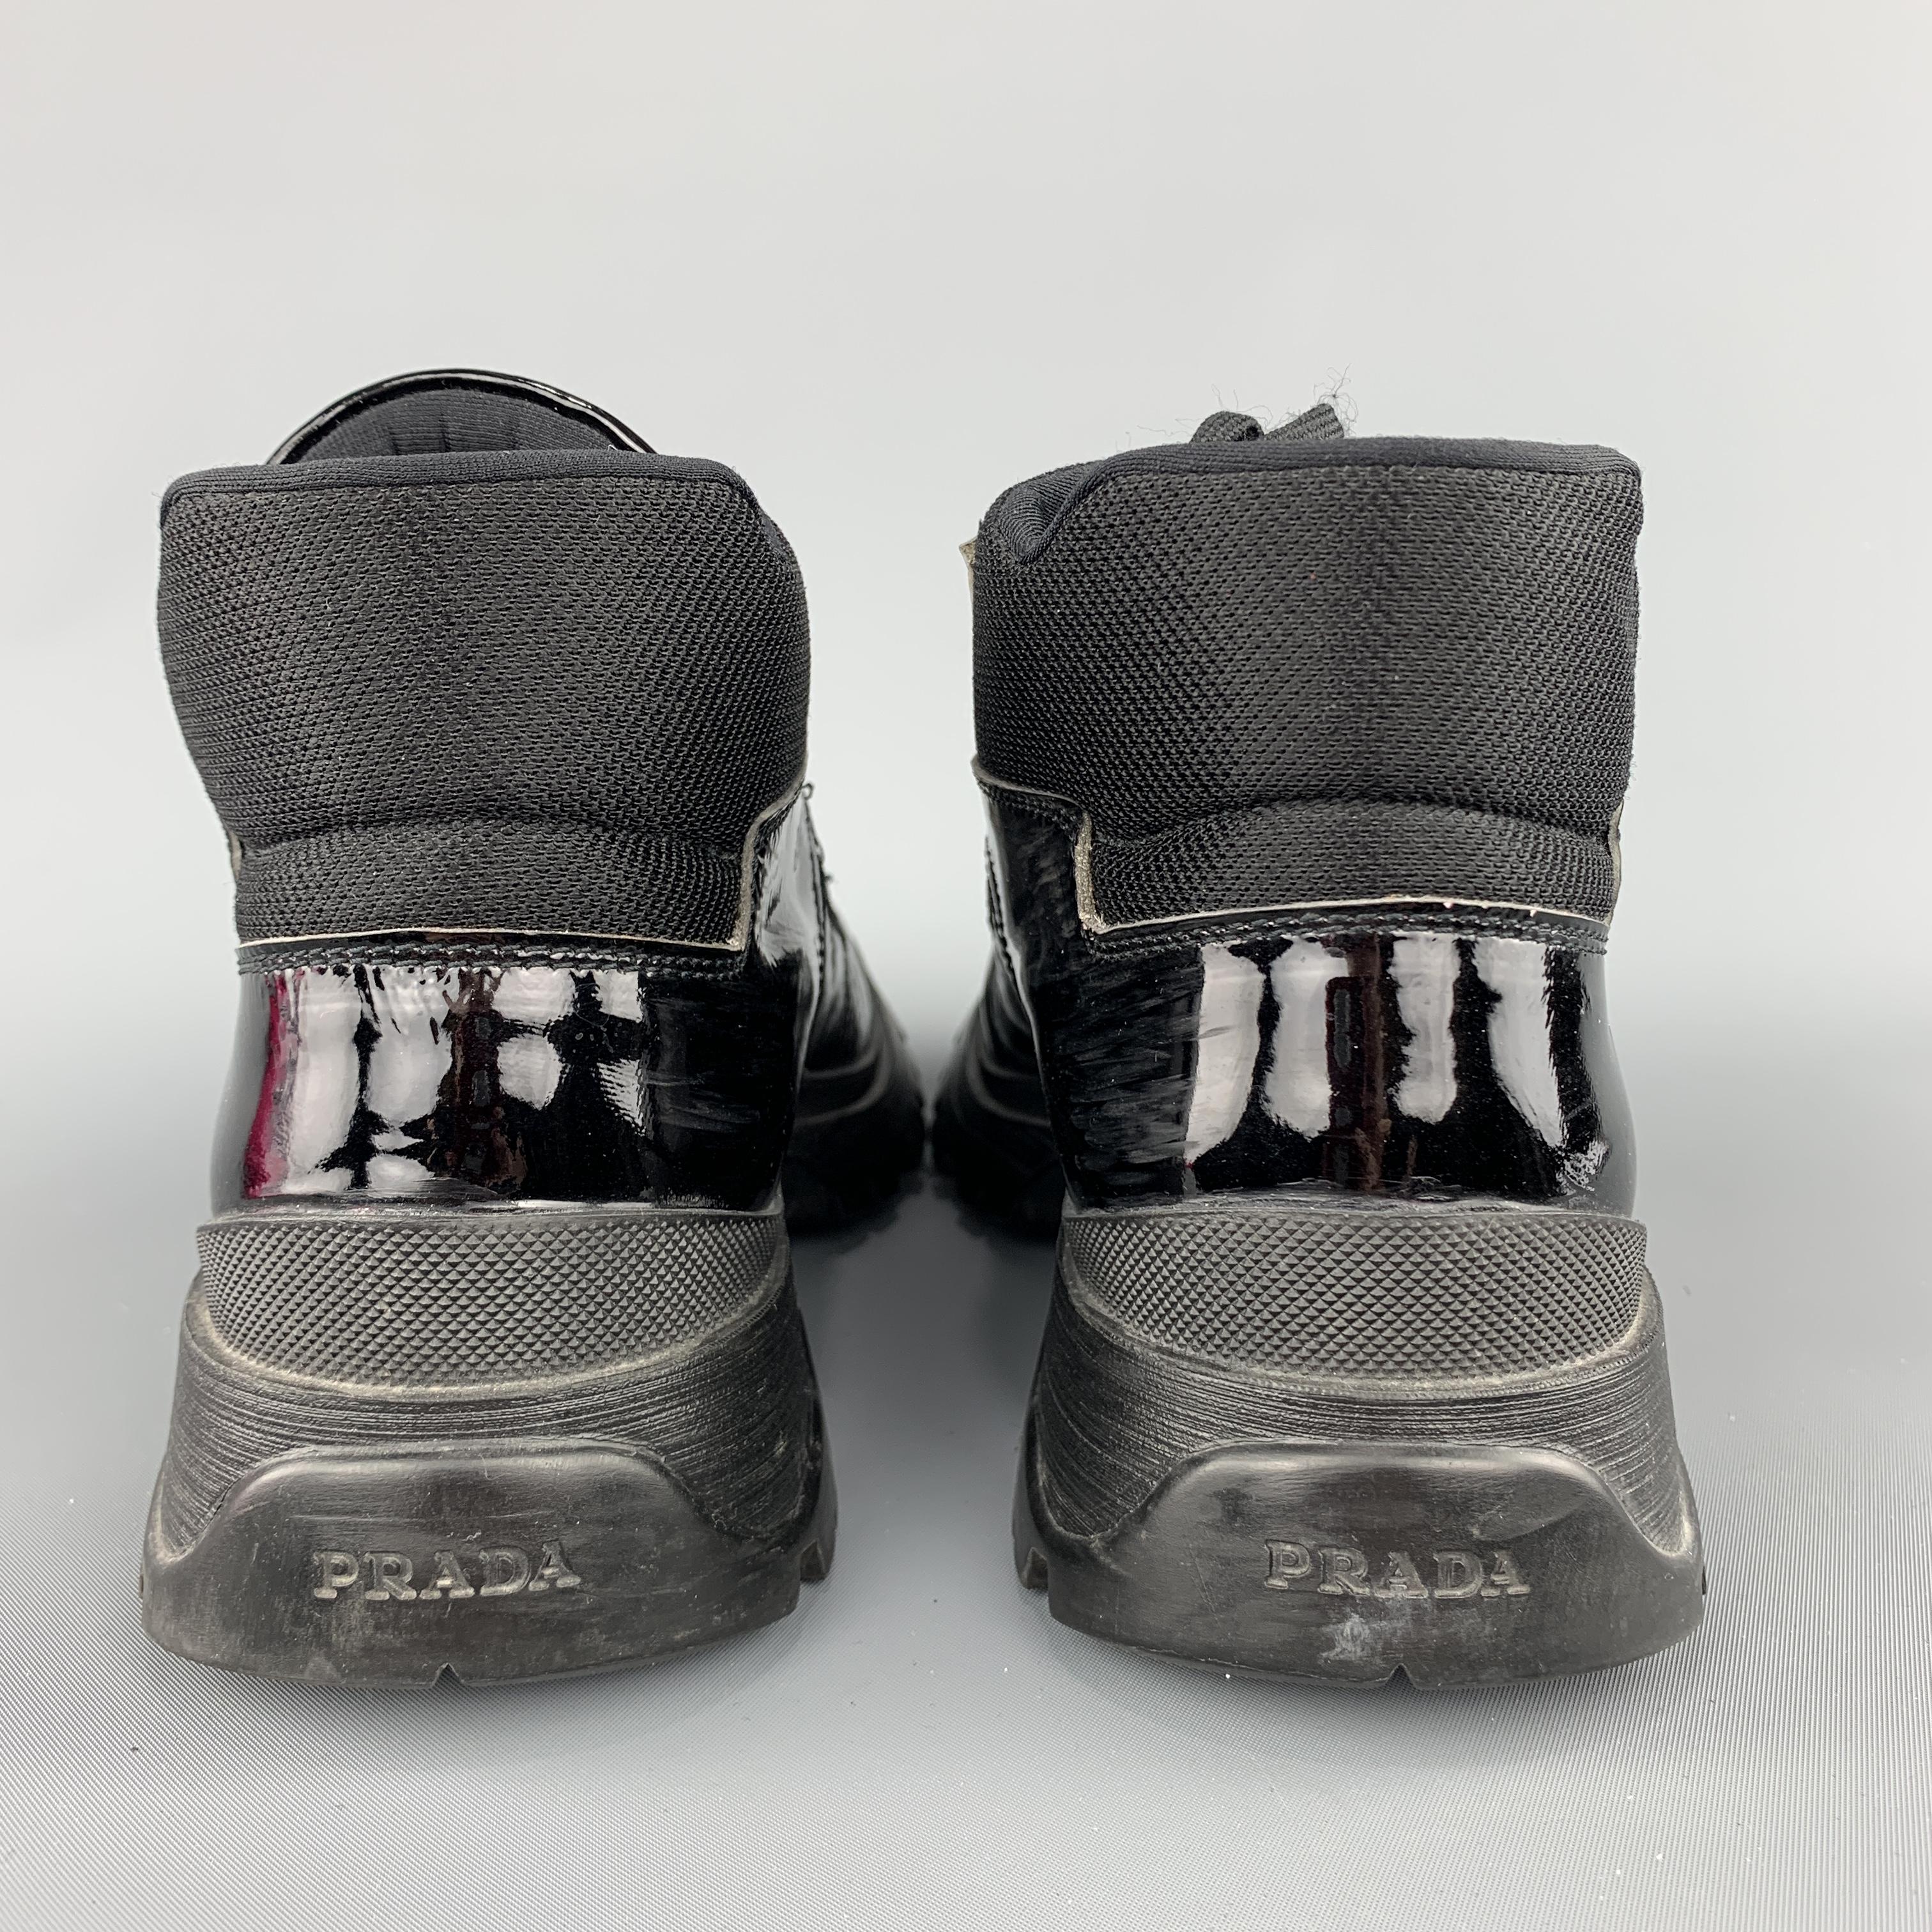  PRADA Size 7 Black Nylon Patent Leather Hiking Boot Sneakers 1